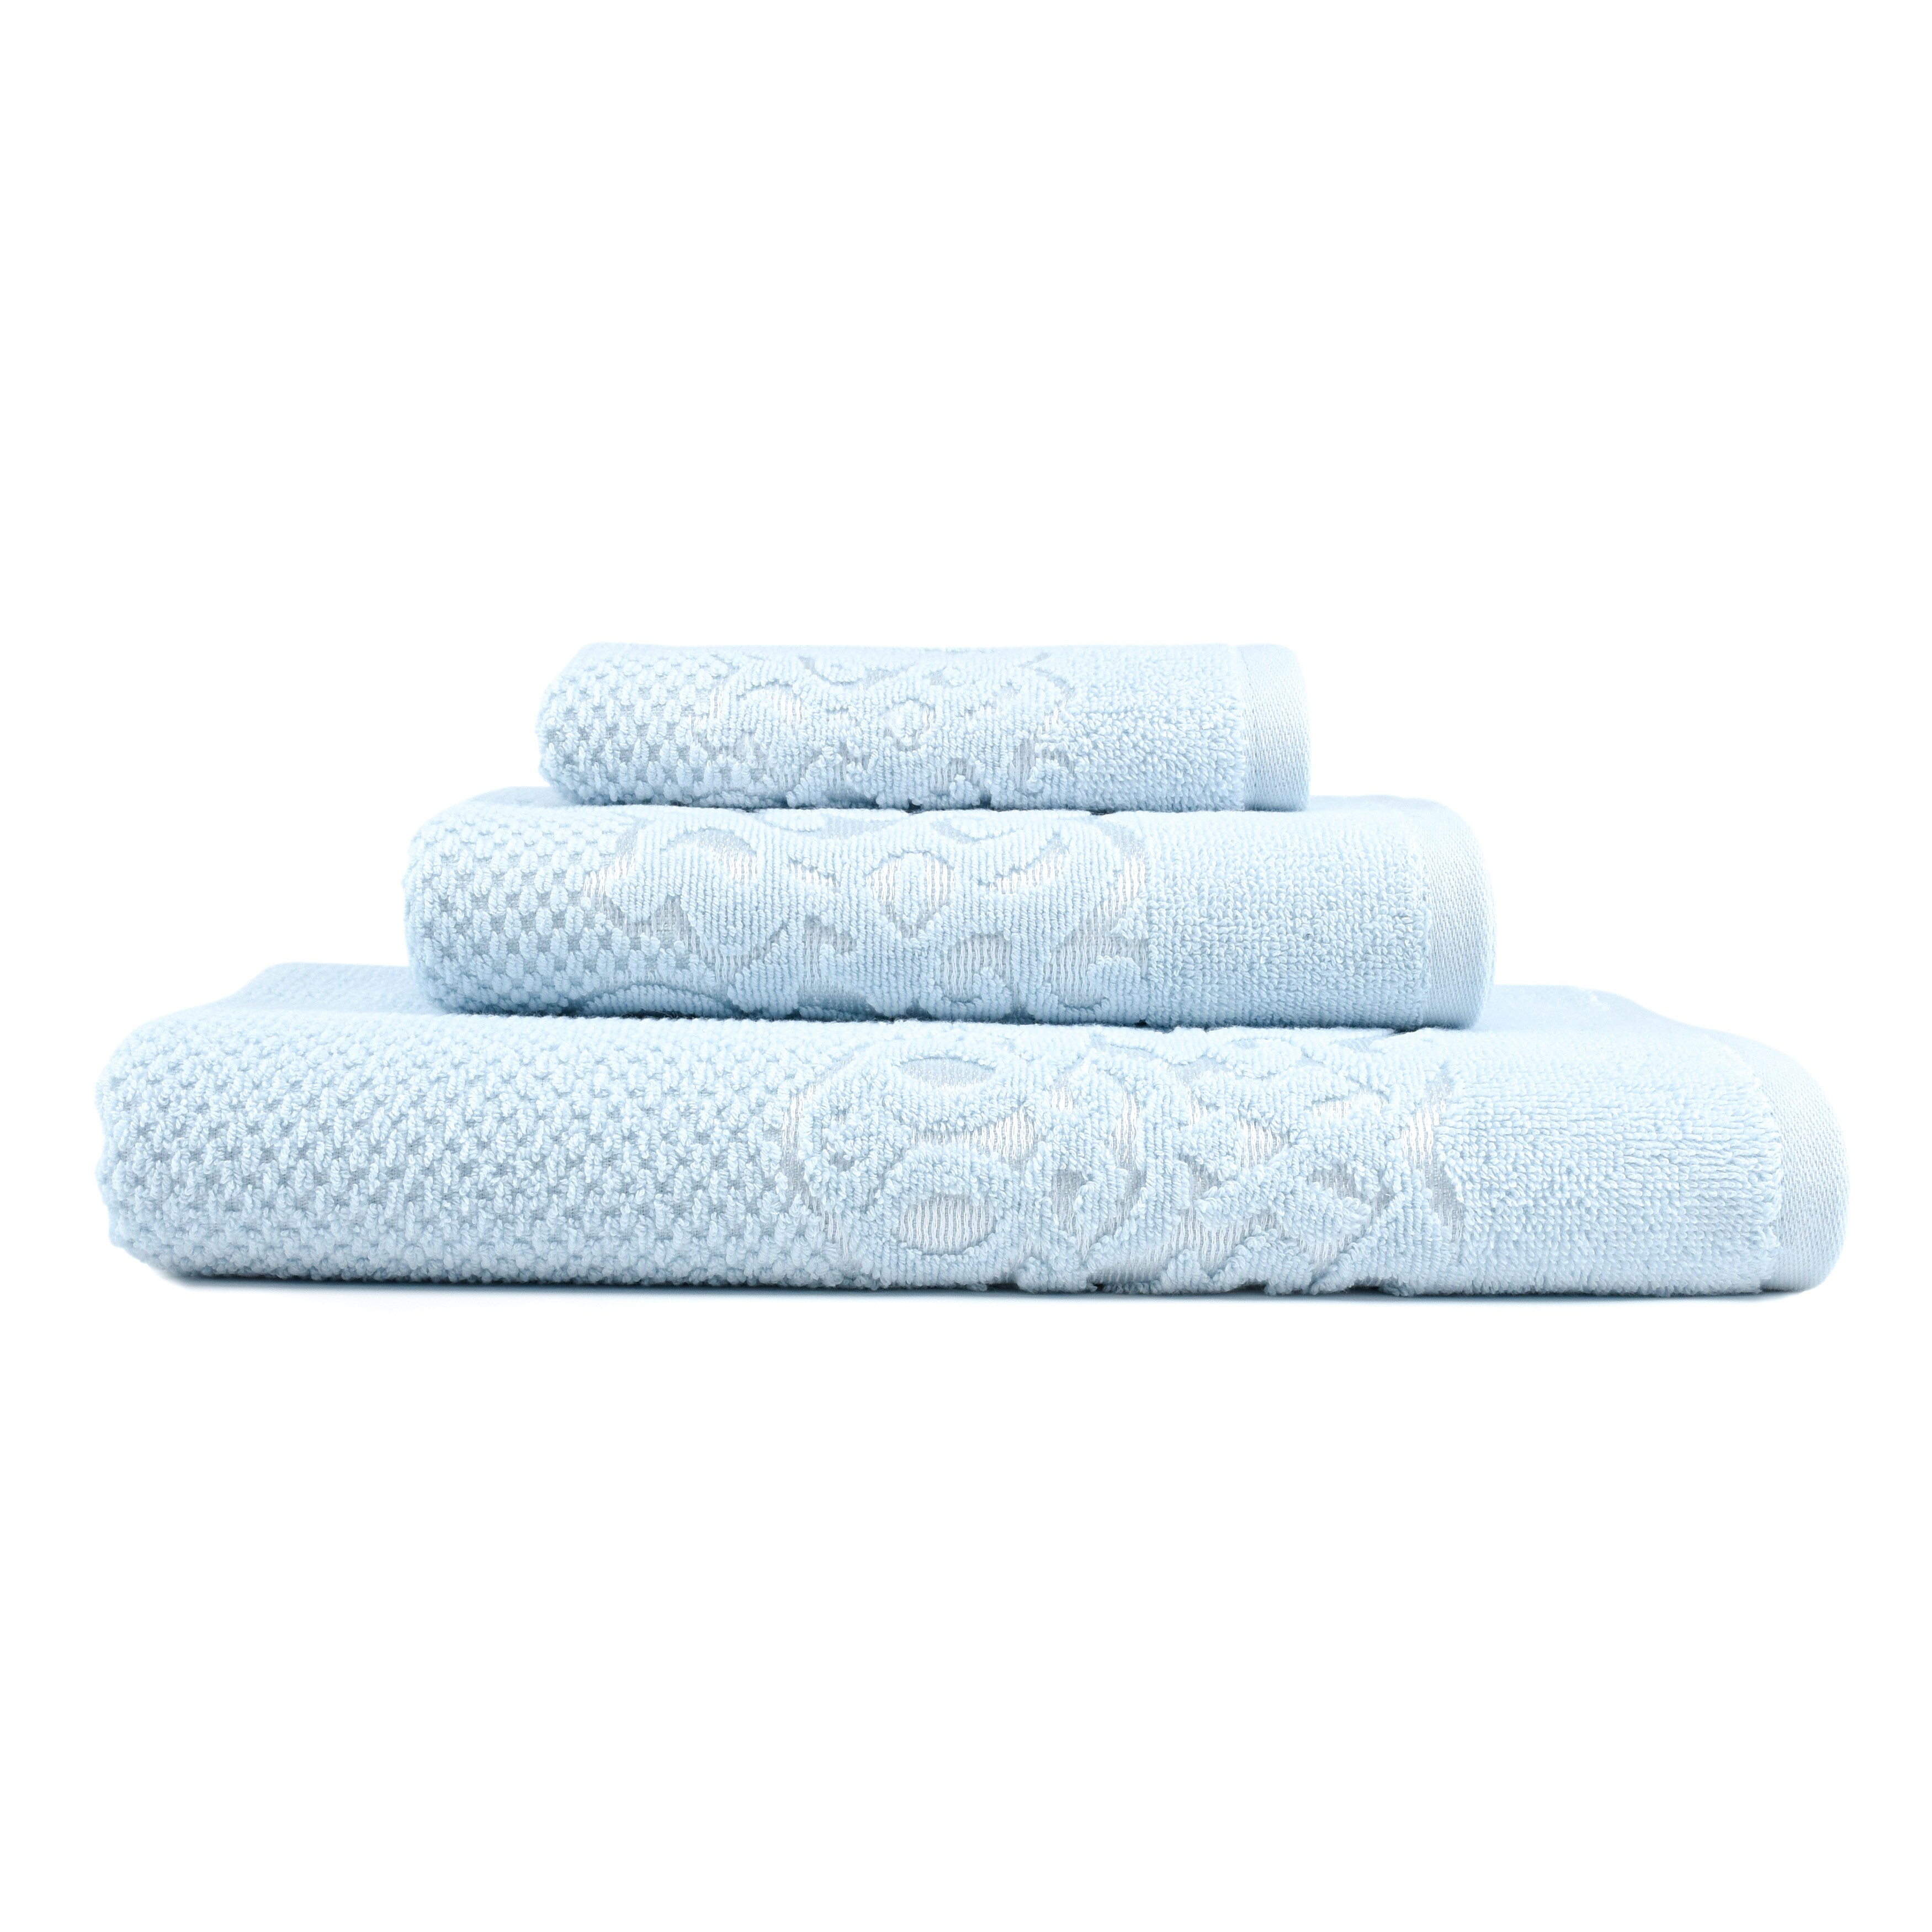 https://ak1.ostkcdn.com/images/products/is/images/direct/2ee55521c37e6426bbe85c015de00a5a3ba1710b/East%27N-Blue-Galata-Turkish-Cotton-Bath-Towel-Set-%28Set-of-3%29---%281-Bath-Towel%2C-1-Hand-Towel%2C-1-Washcloth%29.jpg